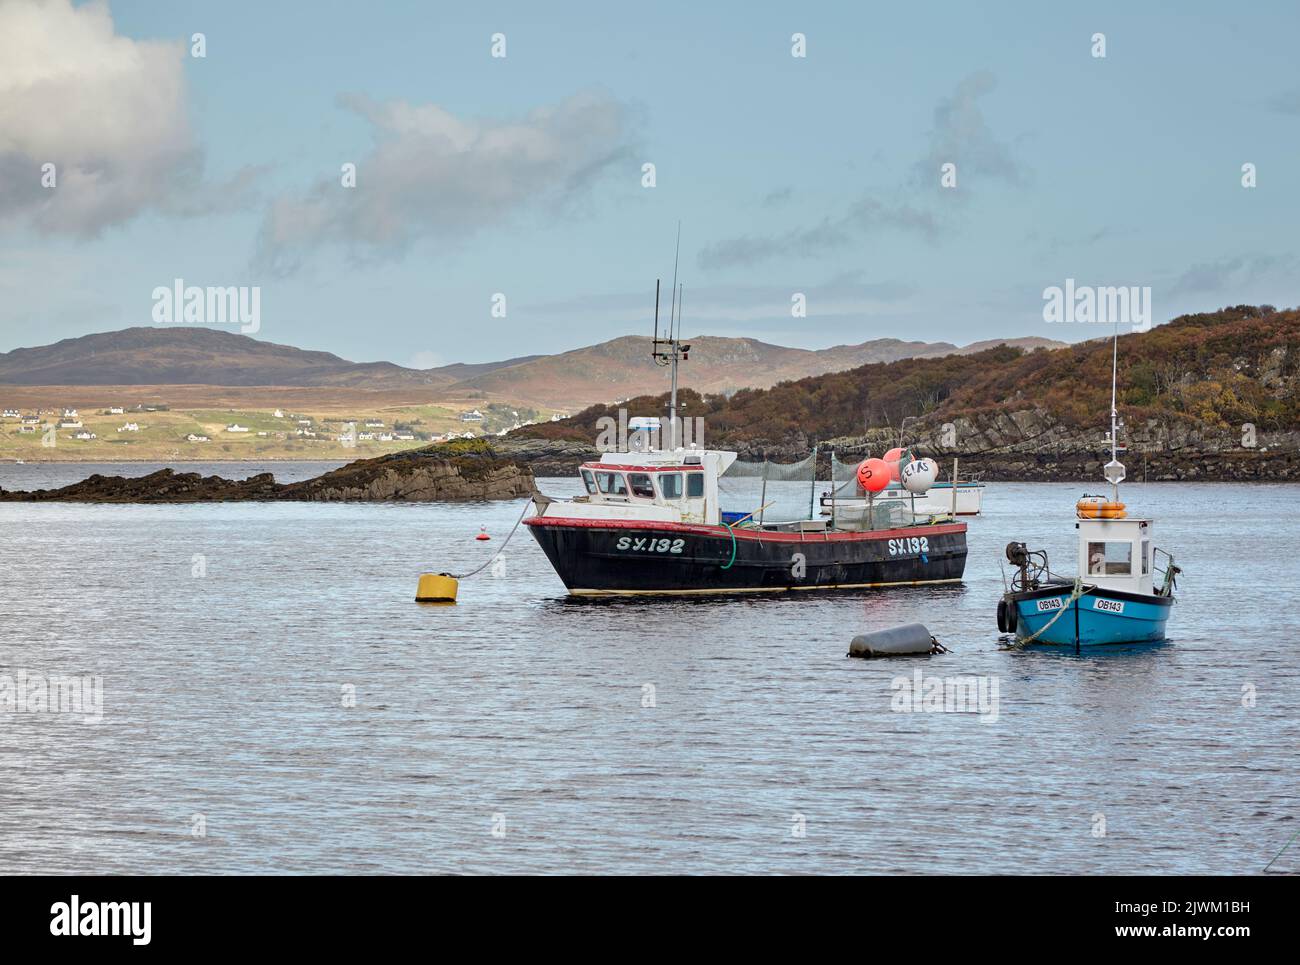 Fishing vessels Sealgairmara and Sula seen from Dry Island, Bedachro, Scotland. Stock Photo